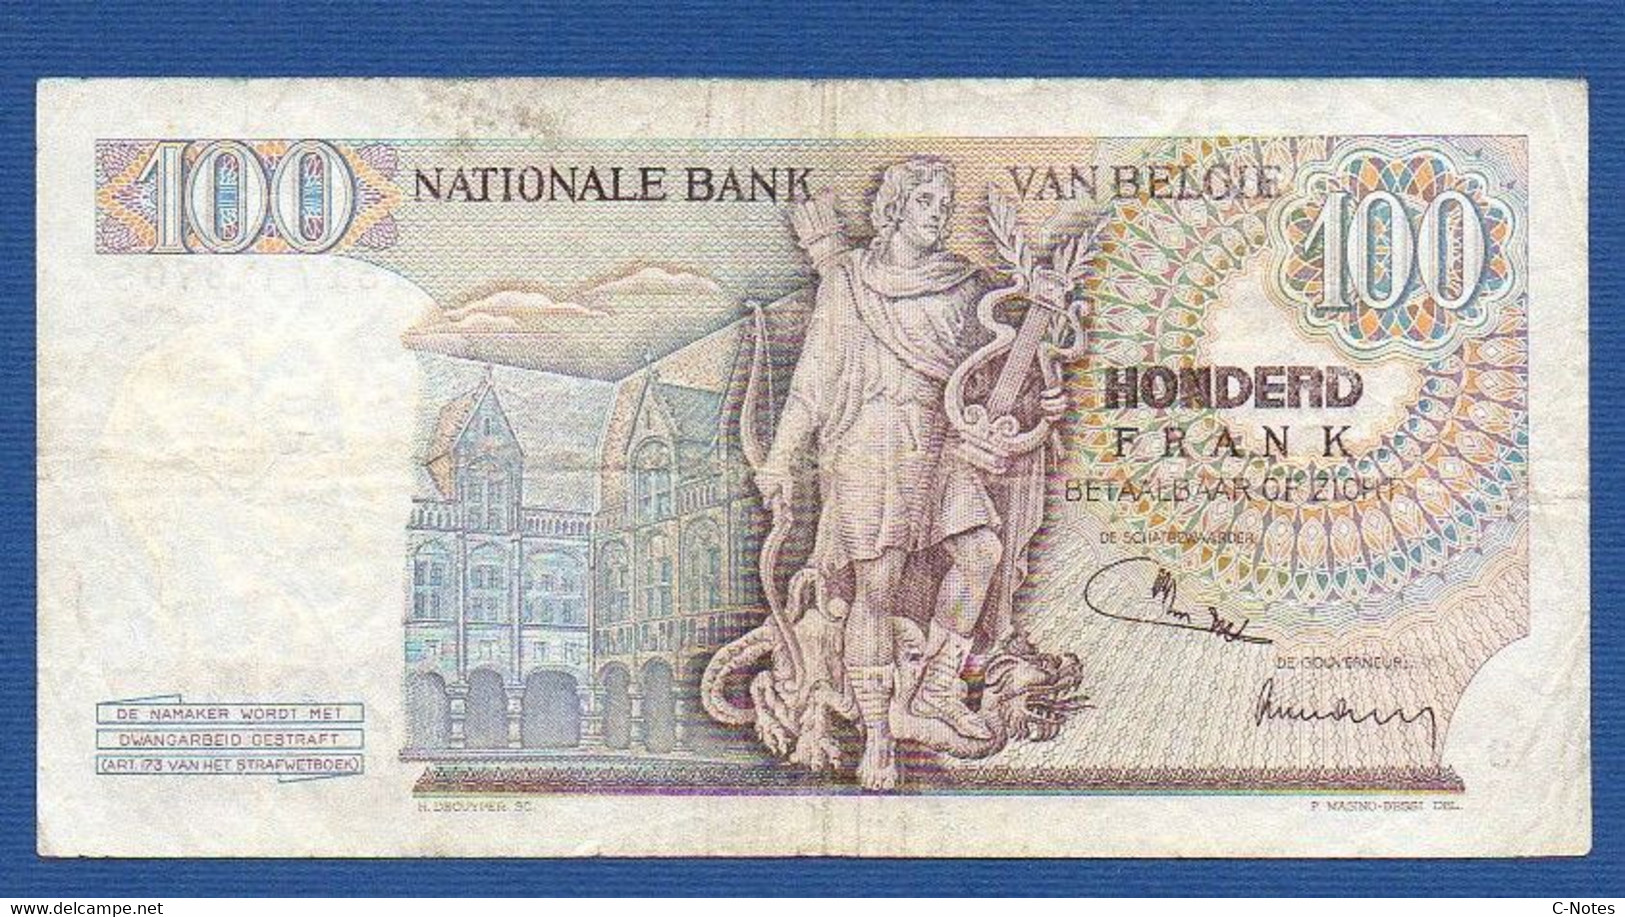 BELGIUM - P.134b - 100 Francs 26.08.1971 AVF, Serie 1517 C 3703 - 100 Francos